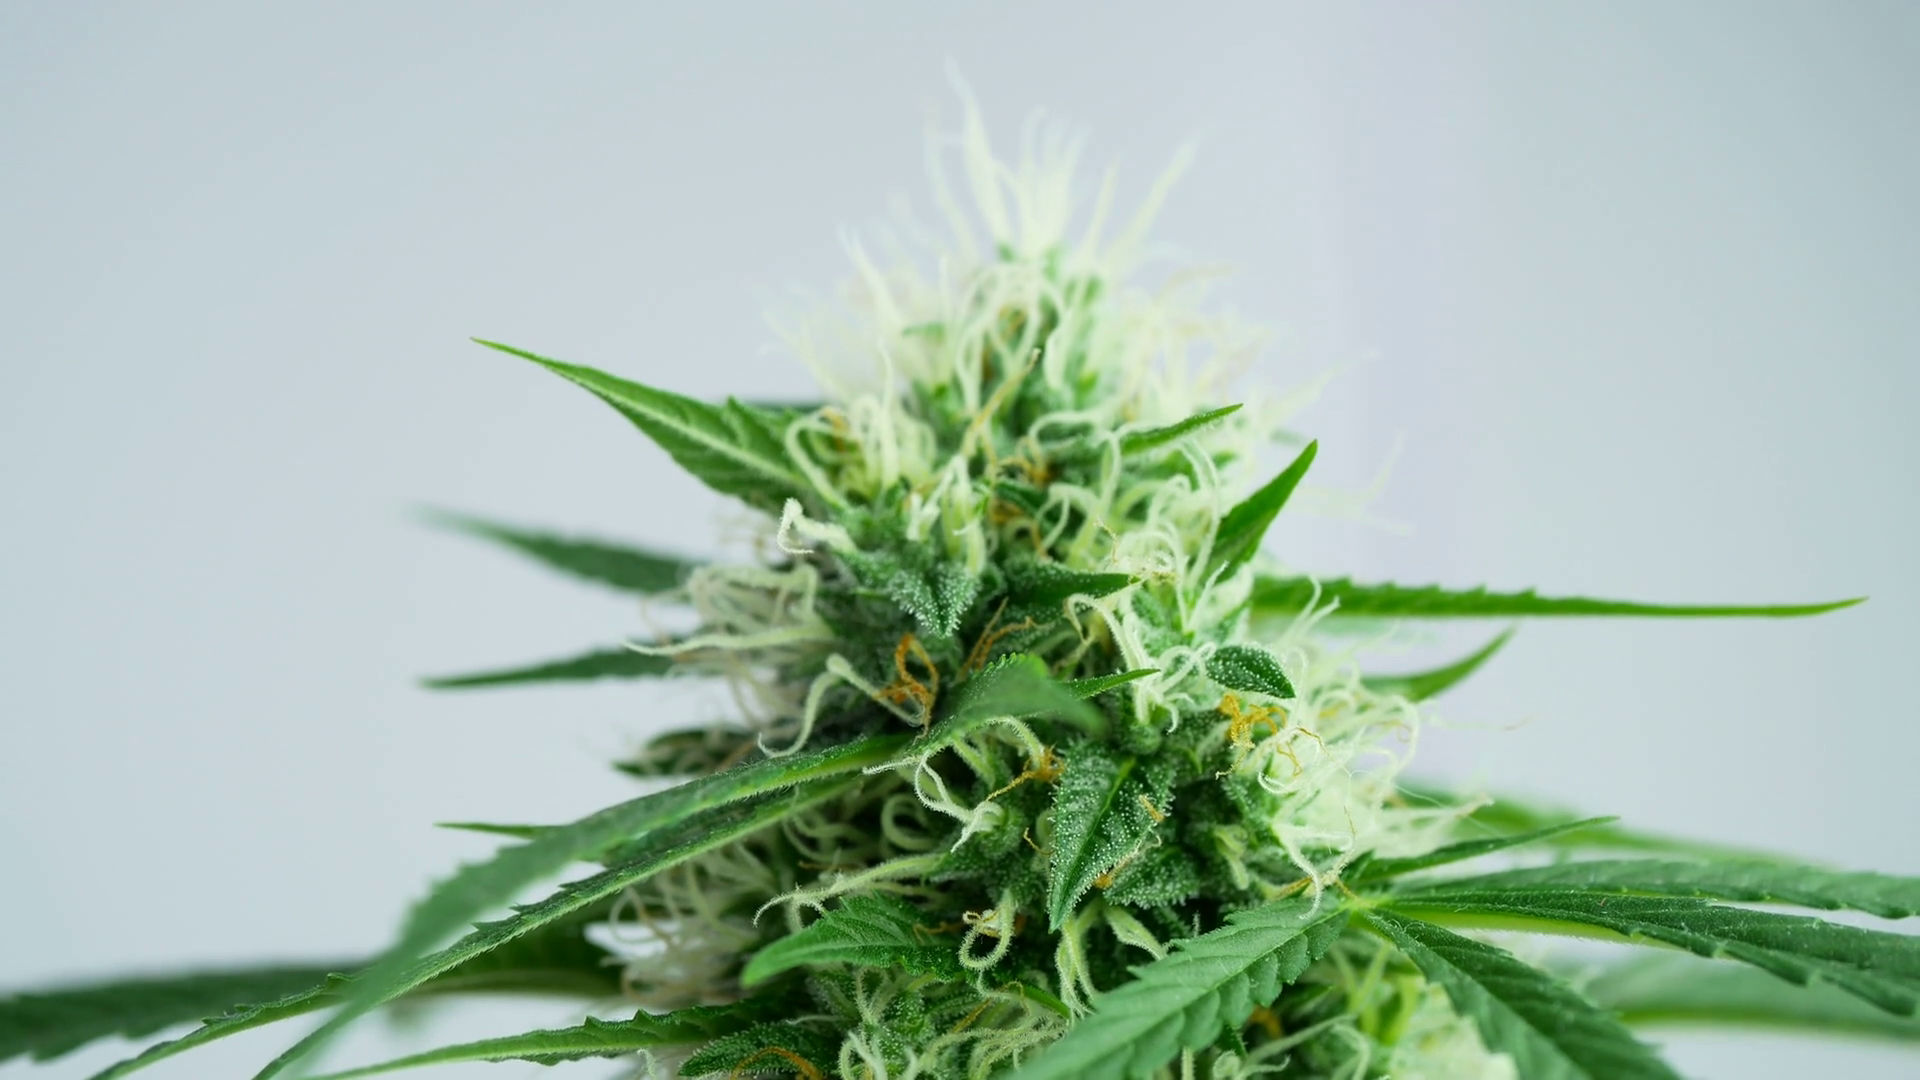 Closeup of Marijuana bud, Cannabis female plant in flowering phase ...